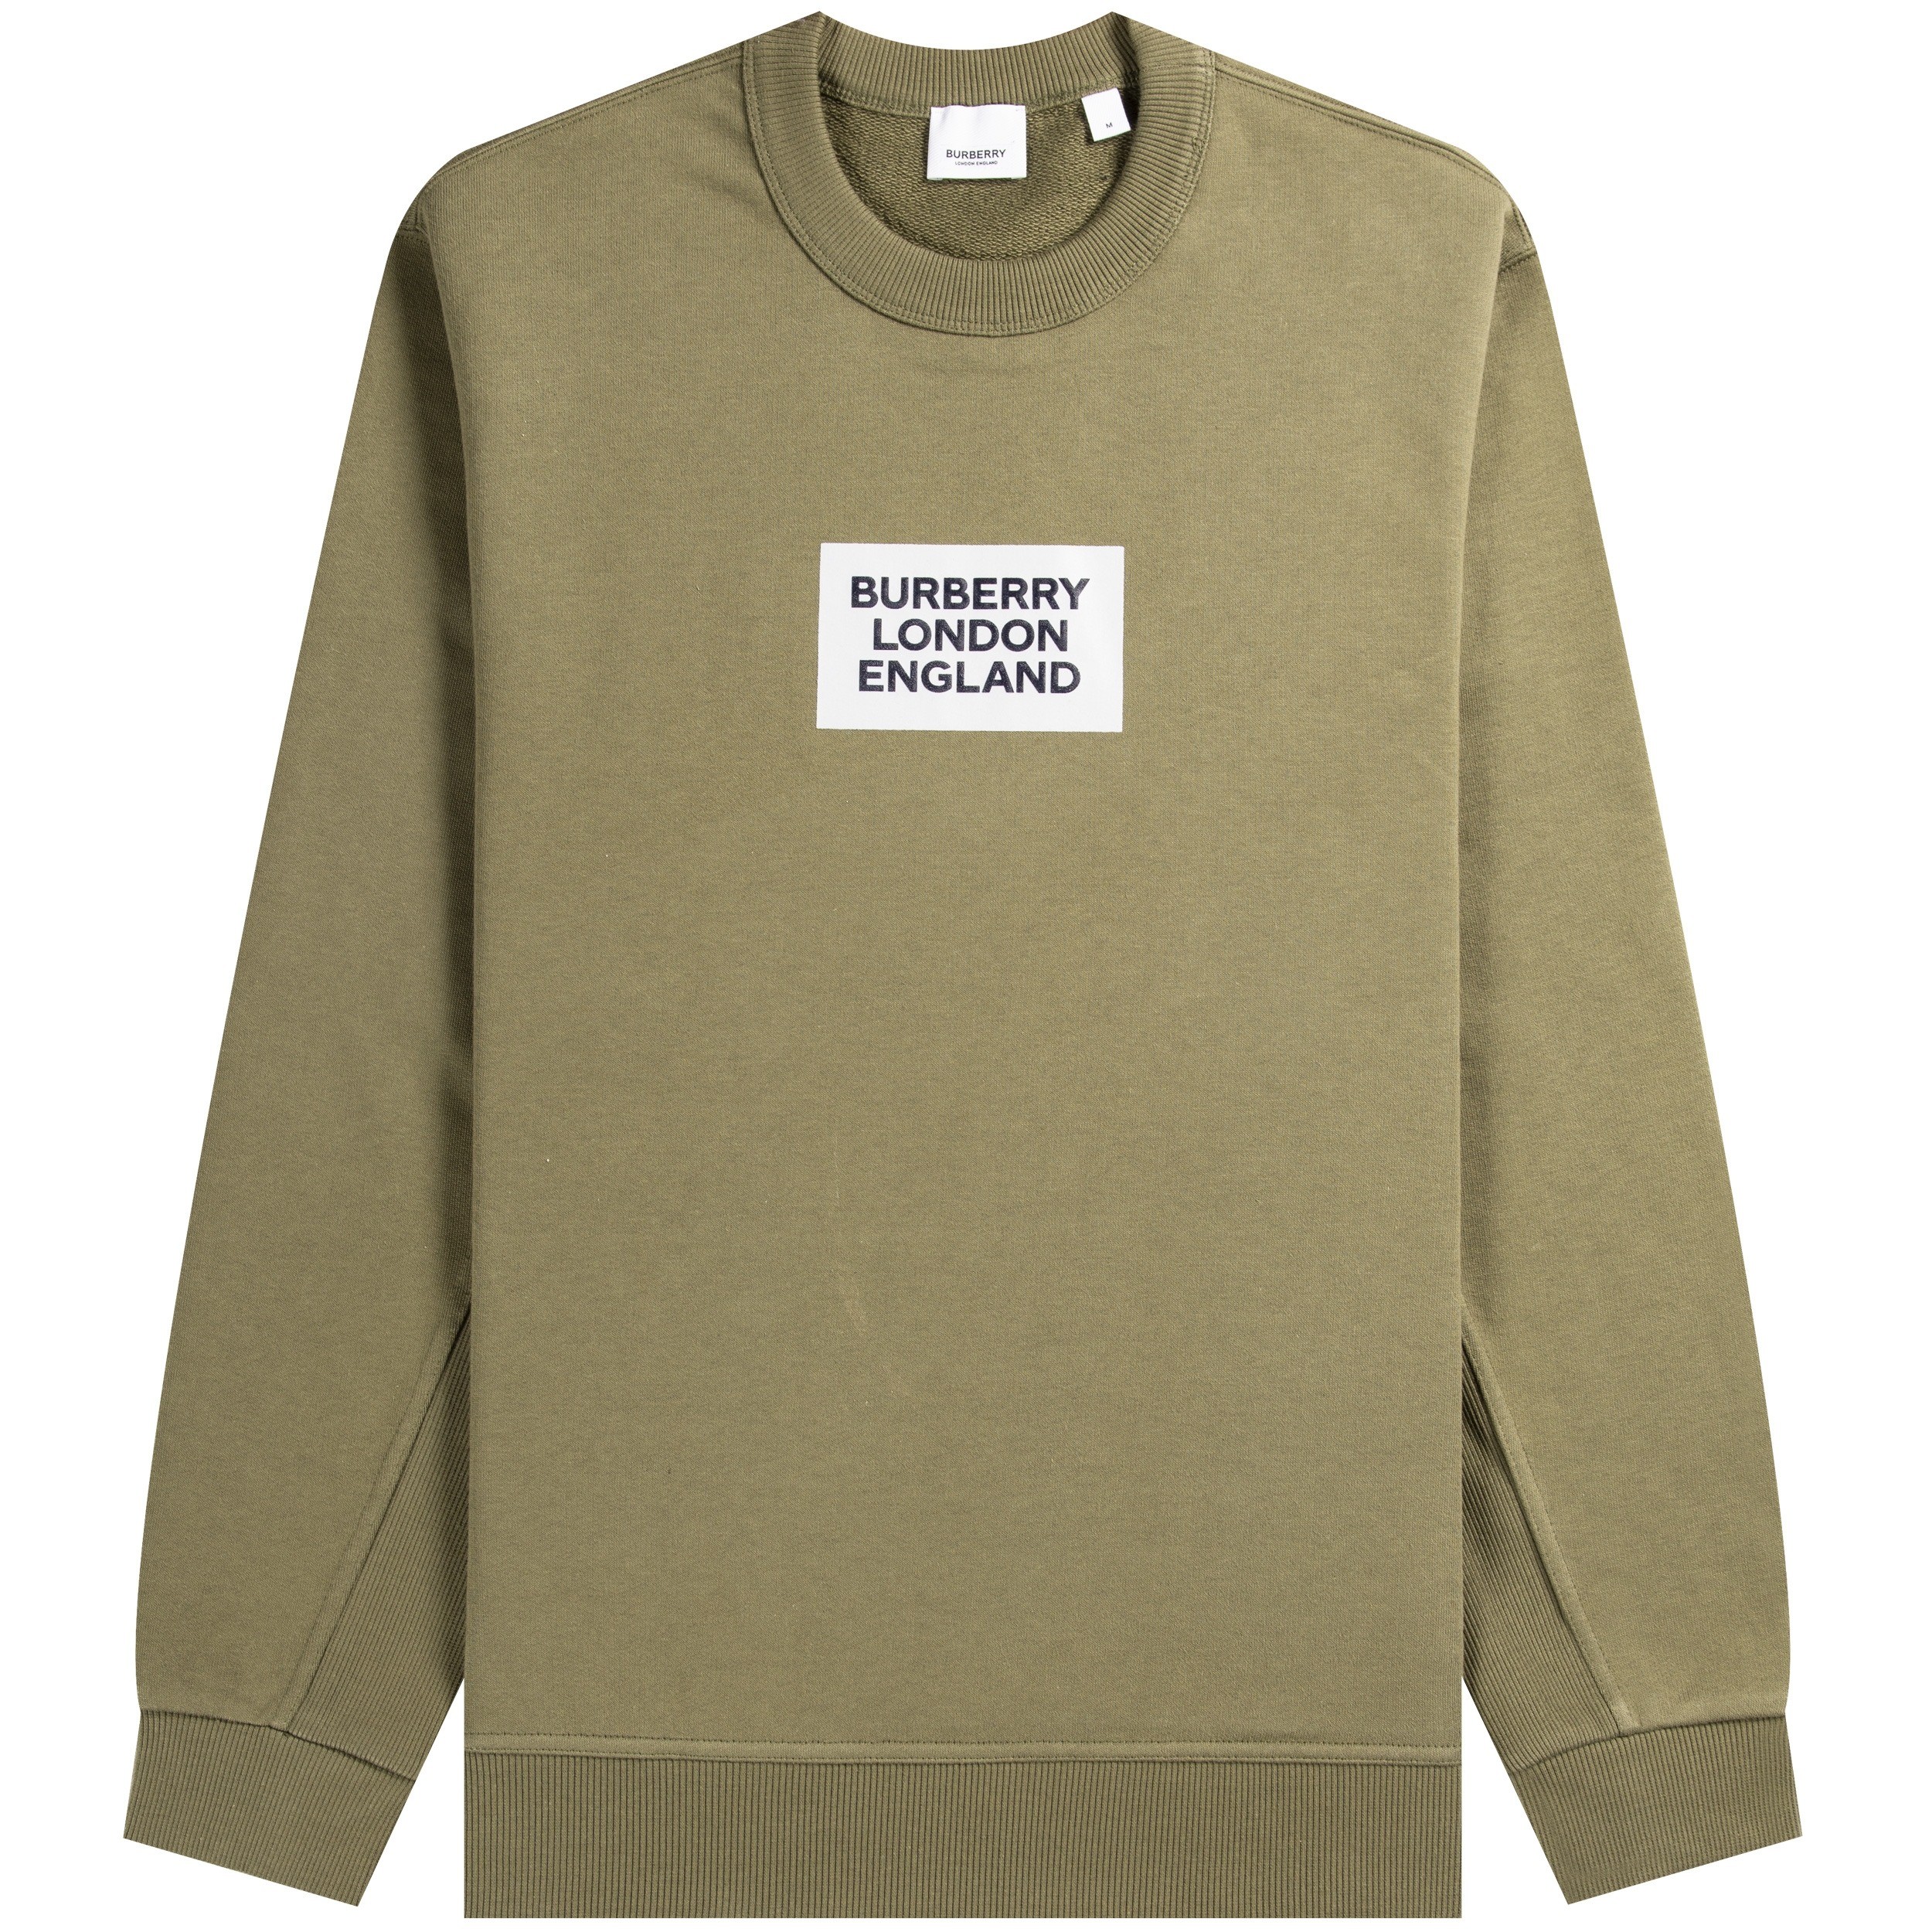 Moncler - logo-patch Fleeceback Cotton-jersey Sweatshirt - Mens - Navy